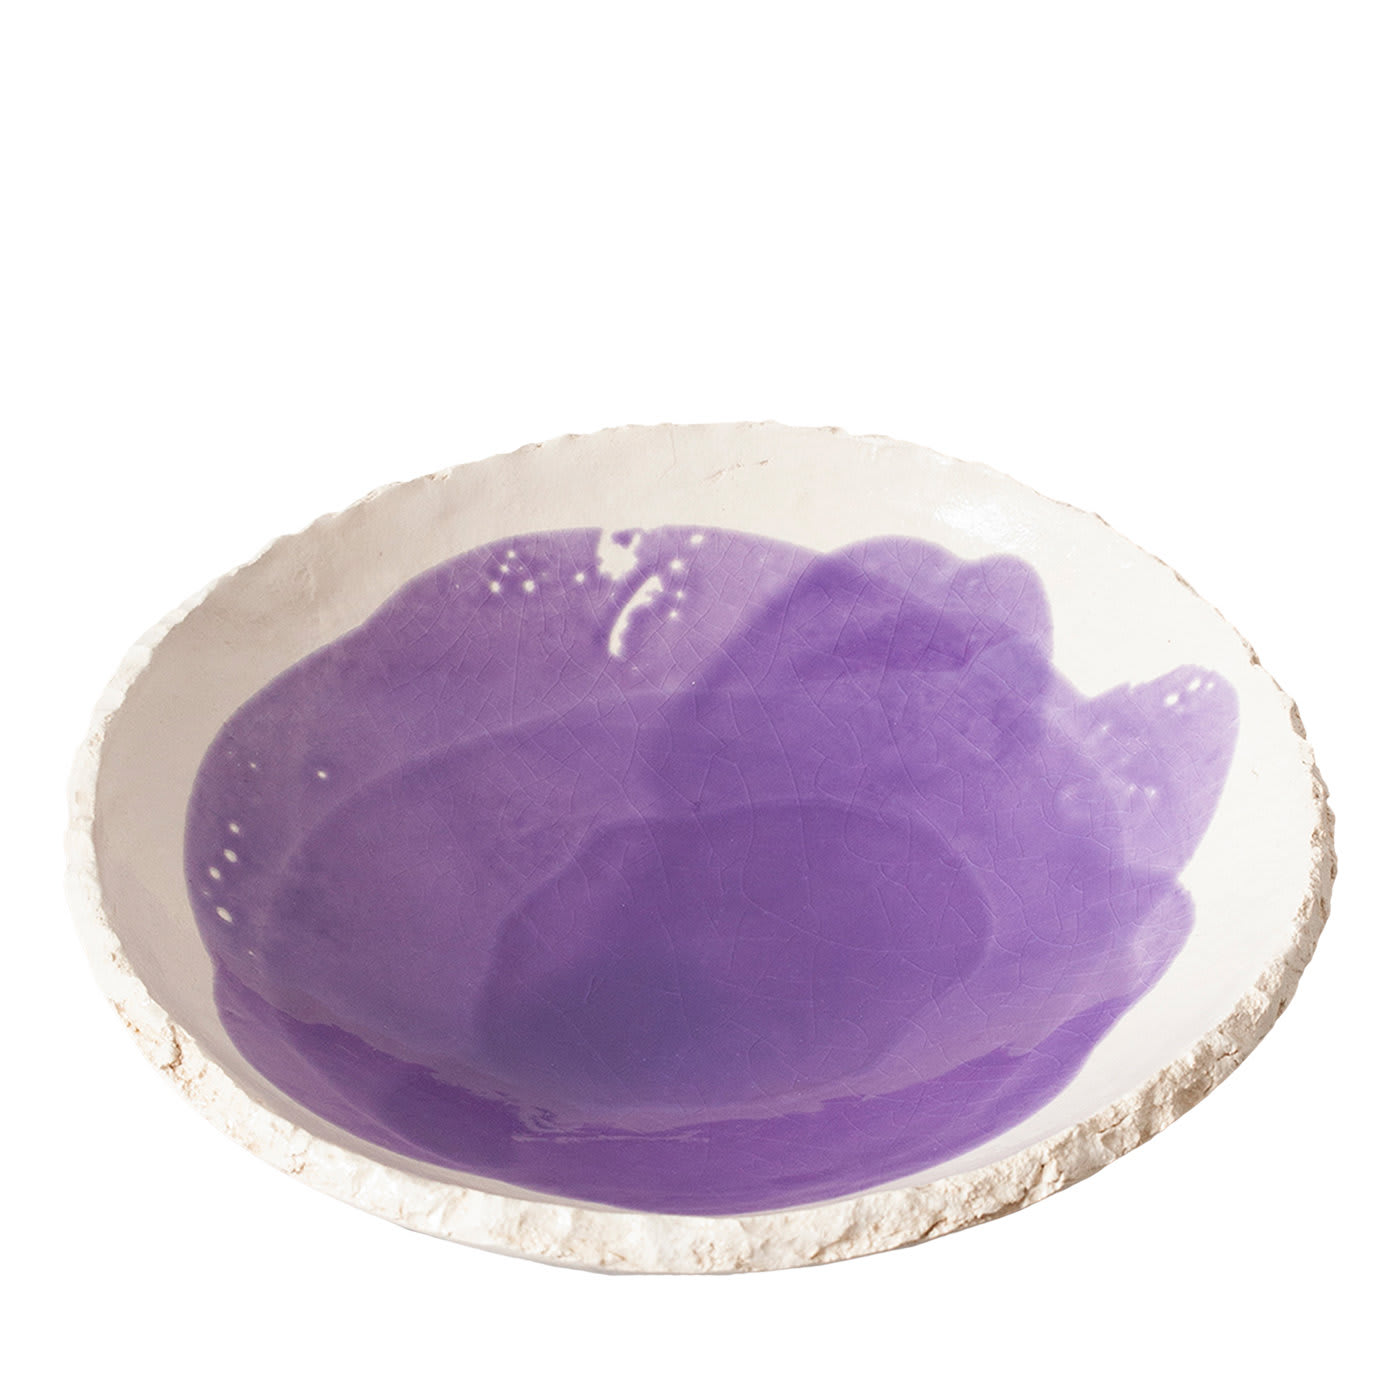 Gusci Large Lilac Bowl - Gianfranco Conte